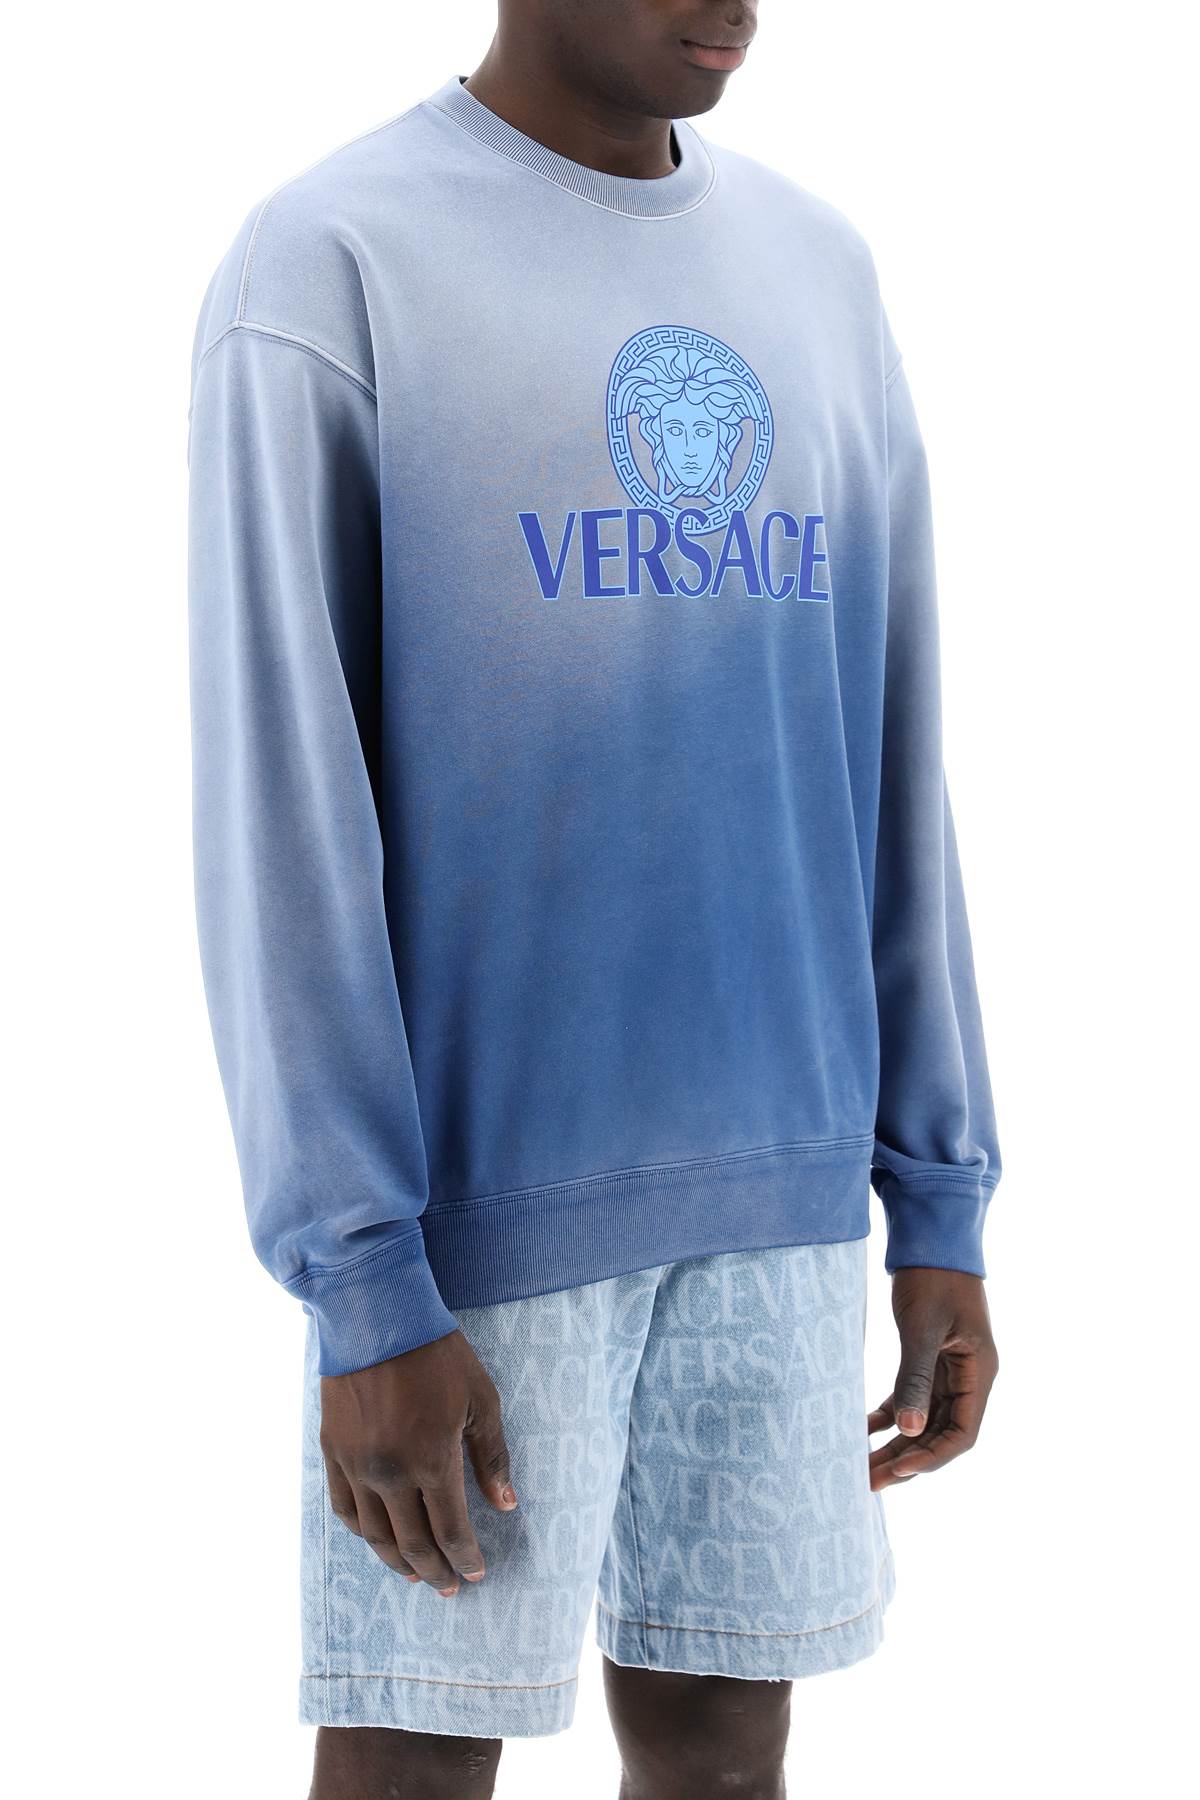 Versace Replace With Double Quotegradient Medusa Sweatshirt   Blue